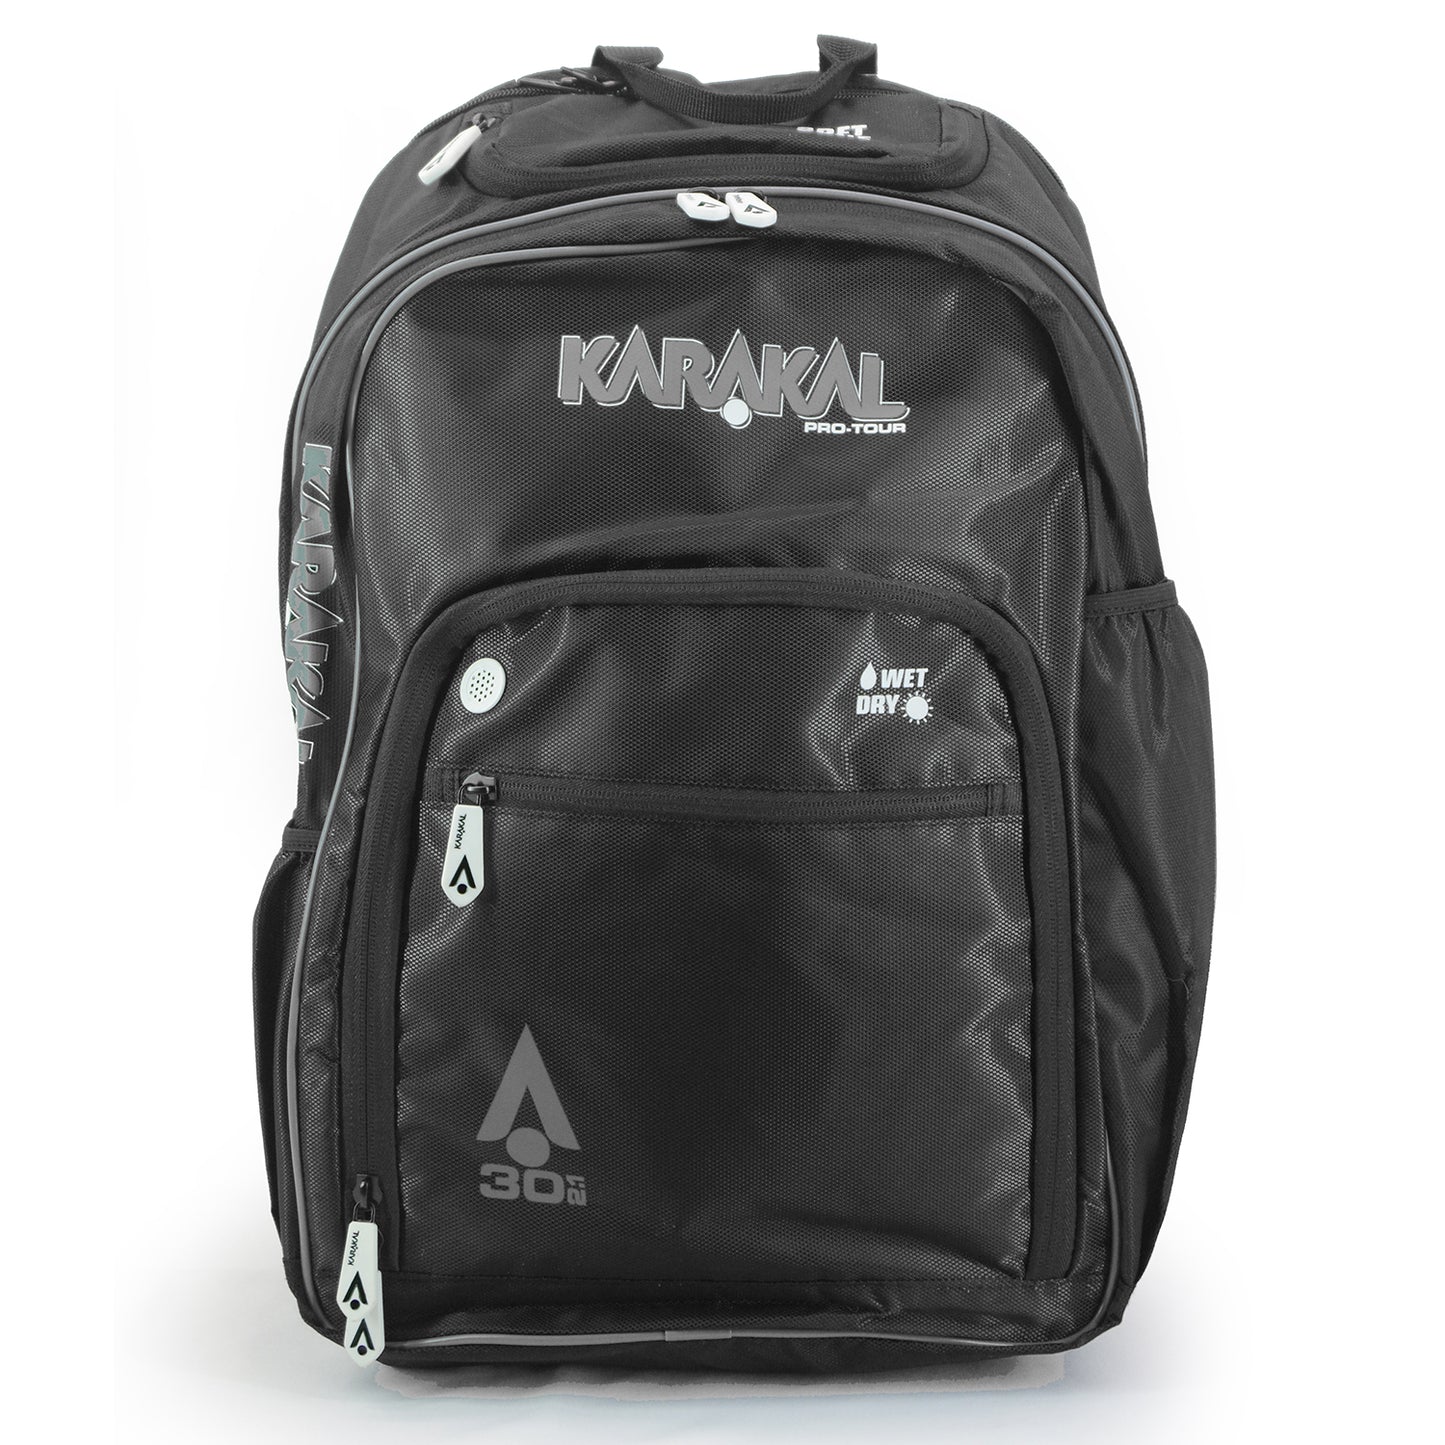 Karakal Pro Tour 30 2.1 Backpack with White Trim